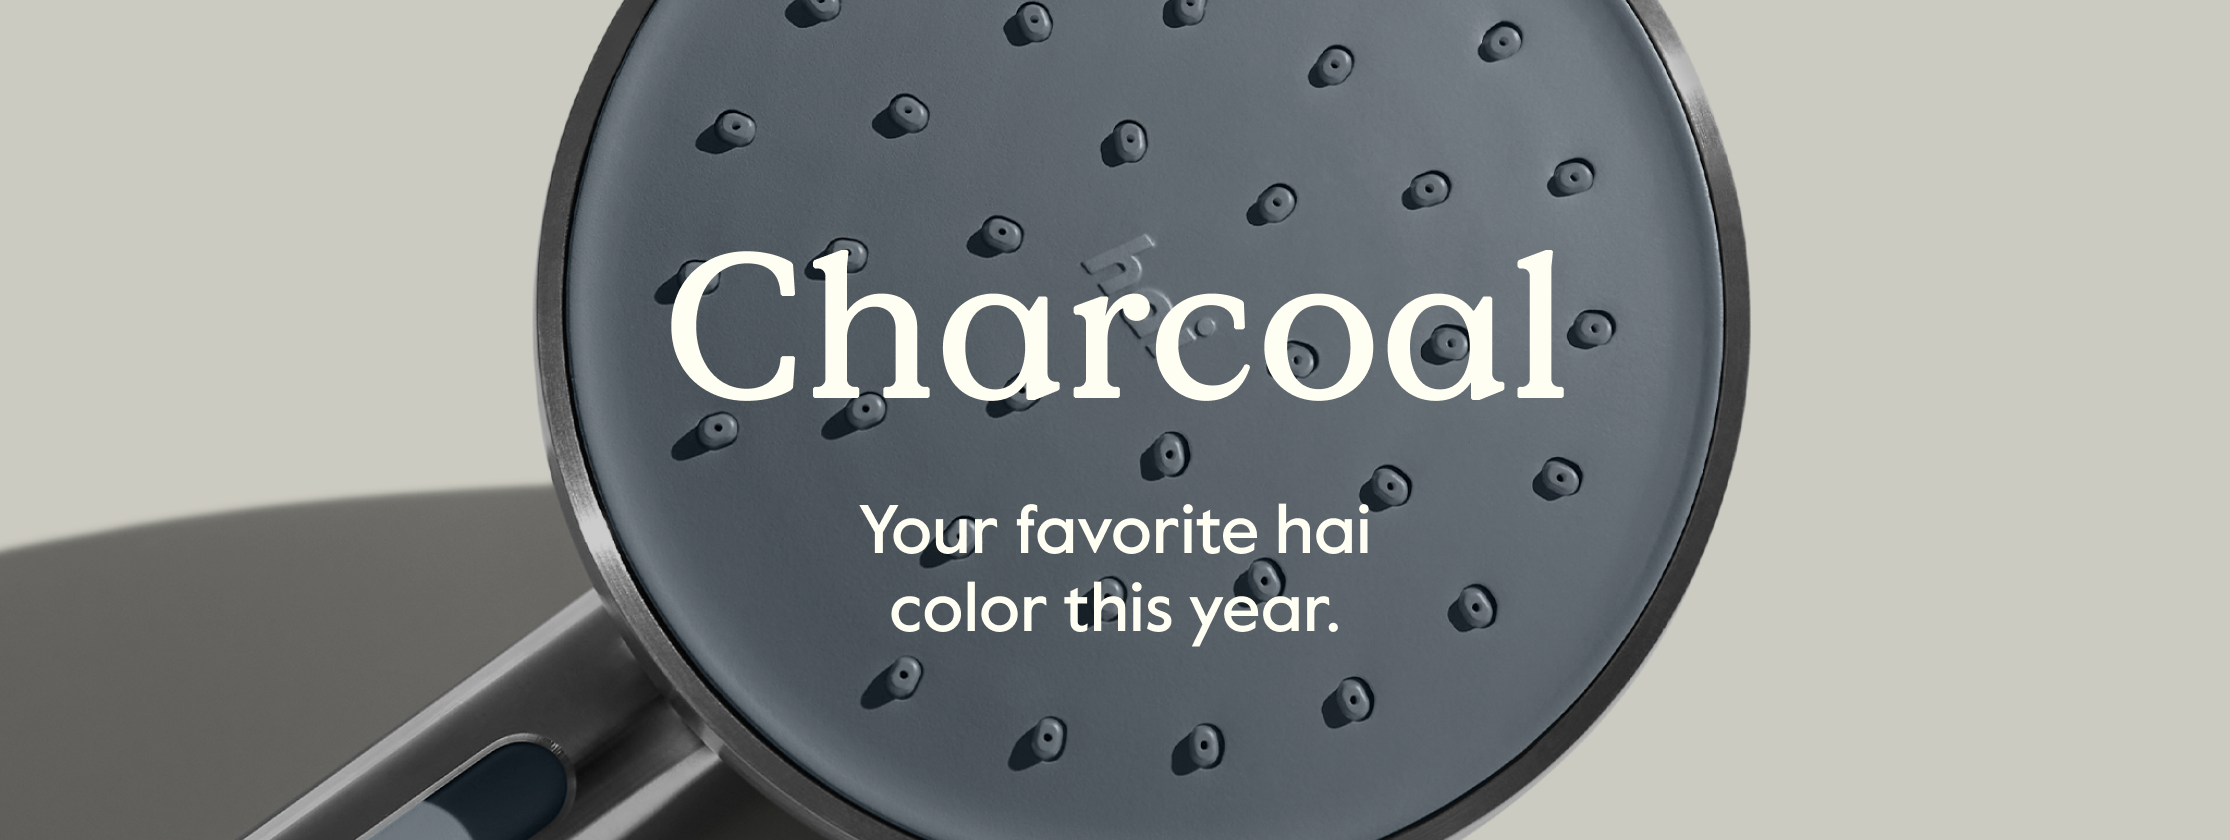 Charcoal smart & bluetooth shower head by hai